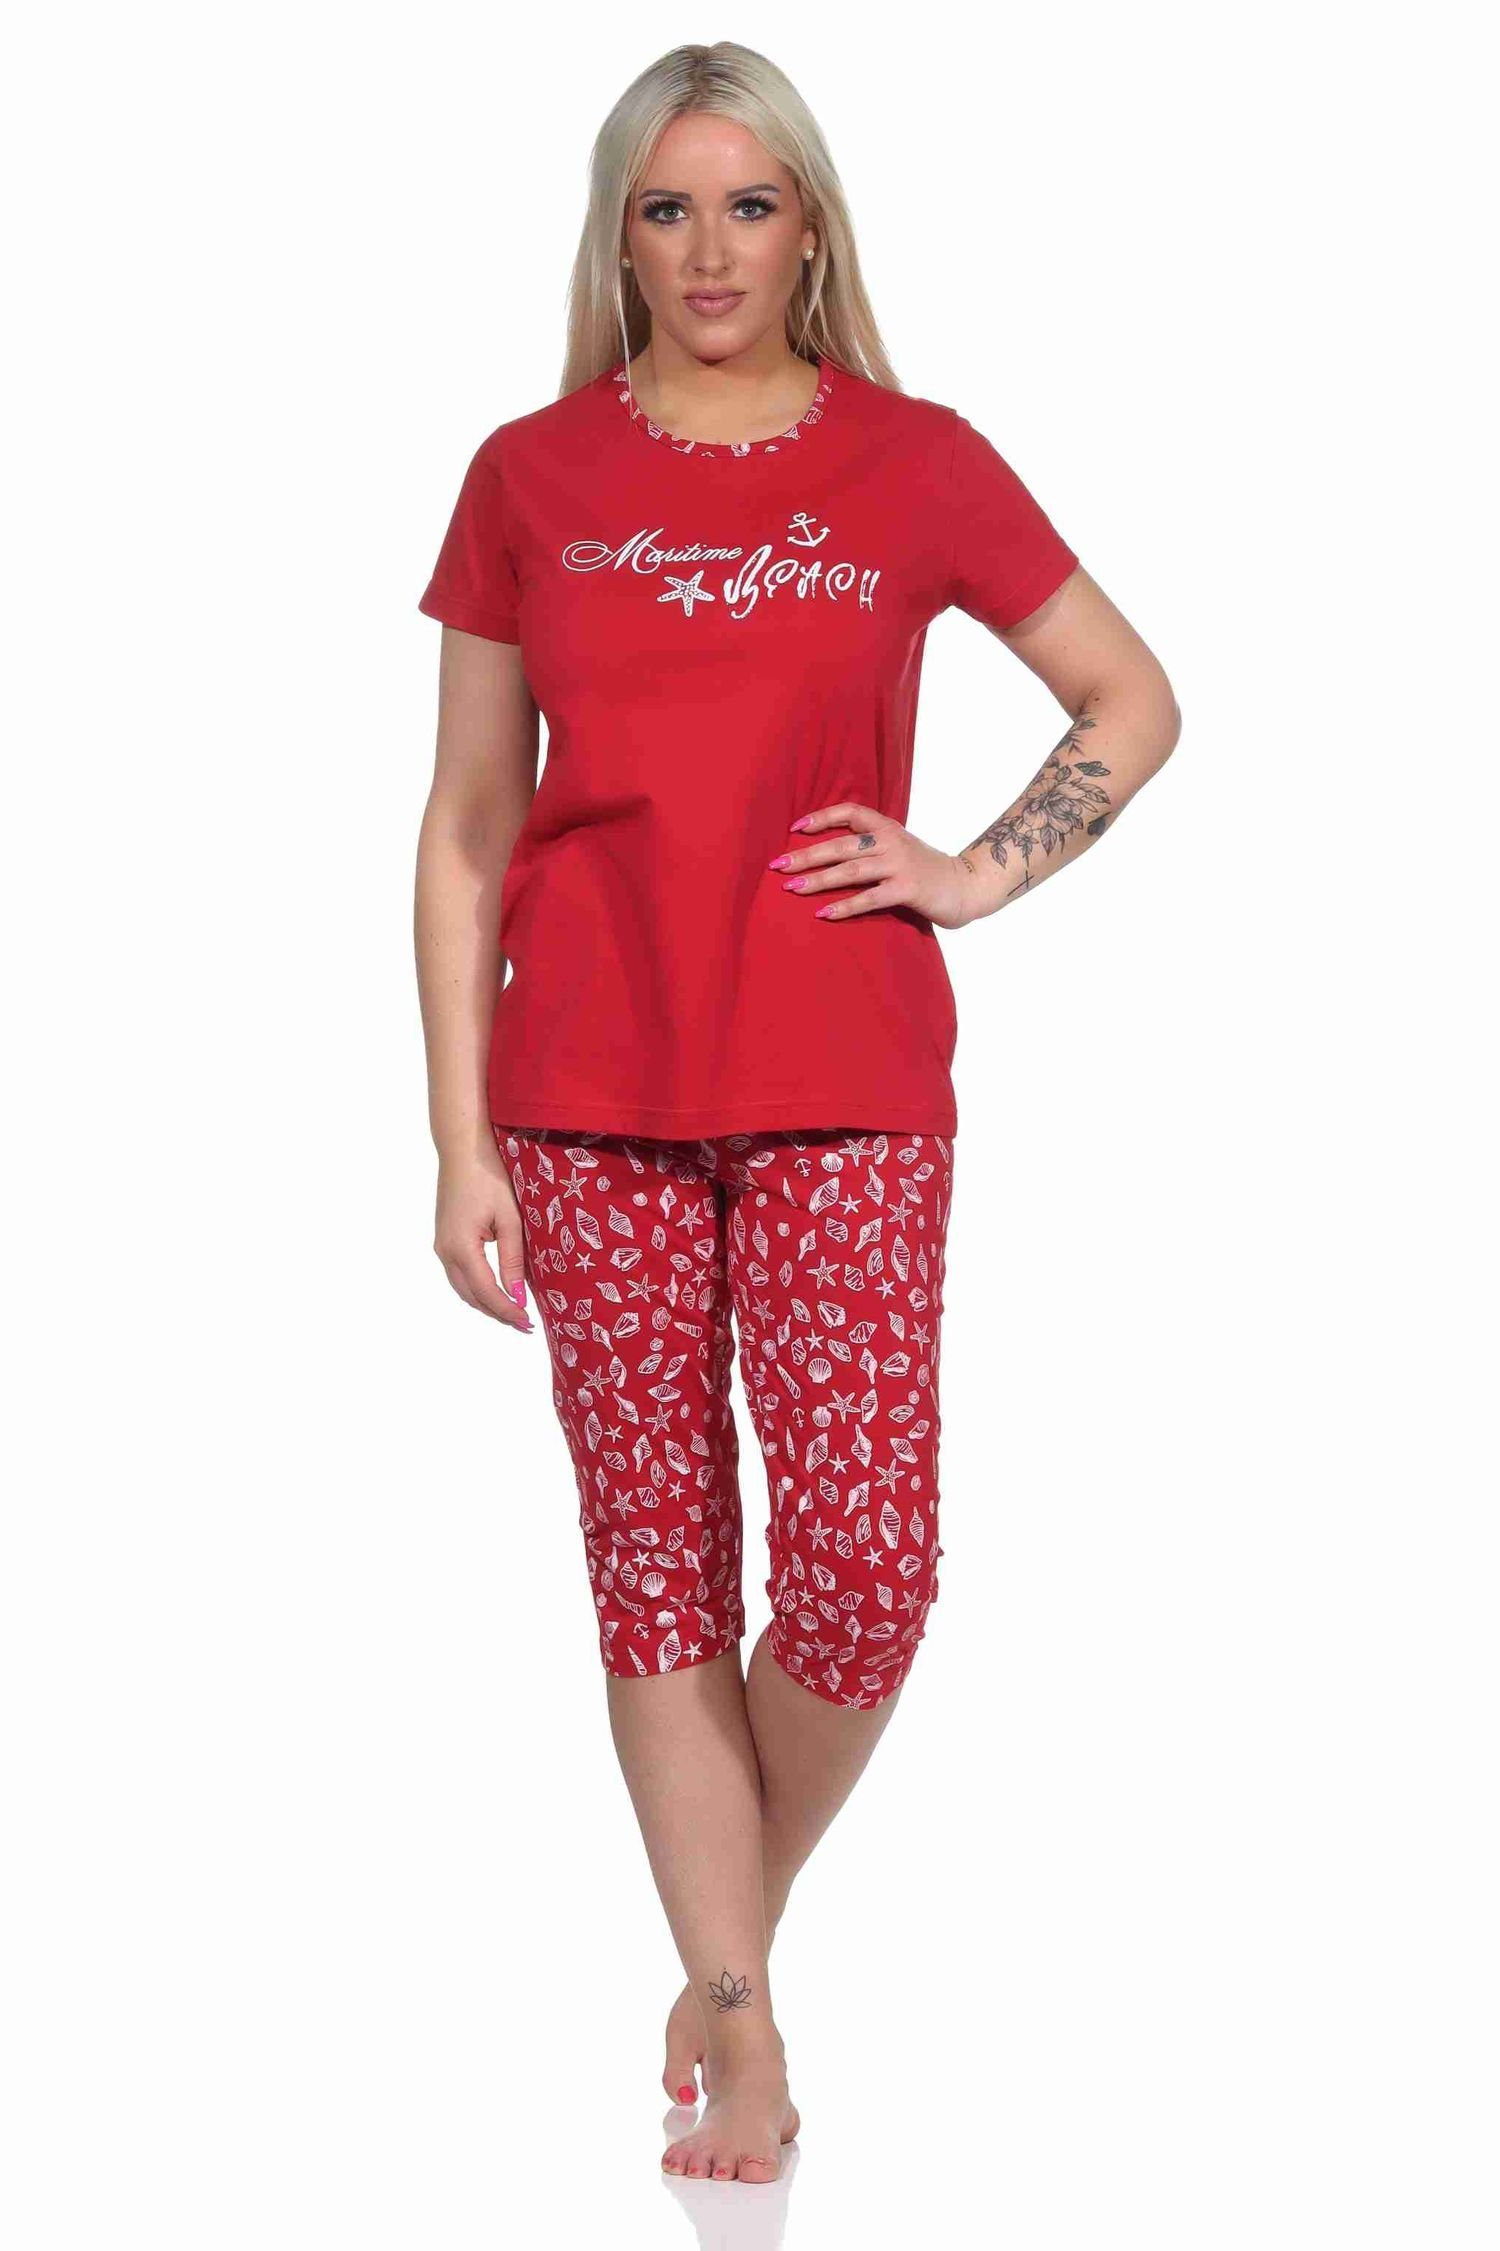 RELAX by Pyjama Damen kurzarm rot Look Pyjama Schlafanzug Normann Capri maritimen im